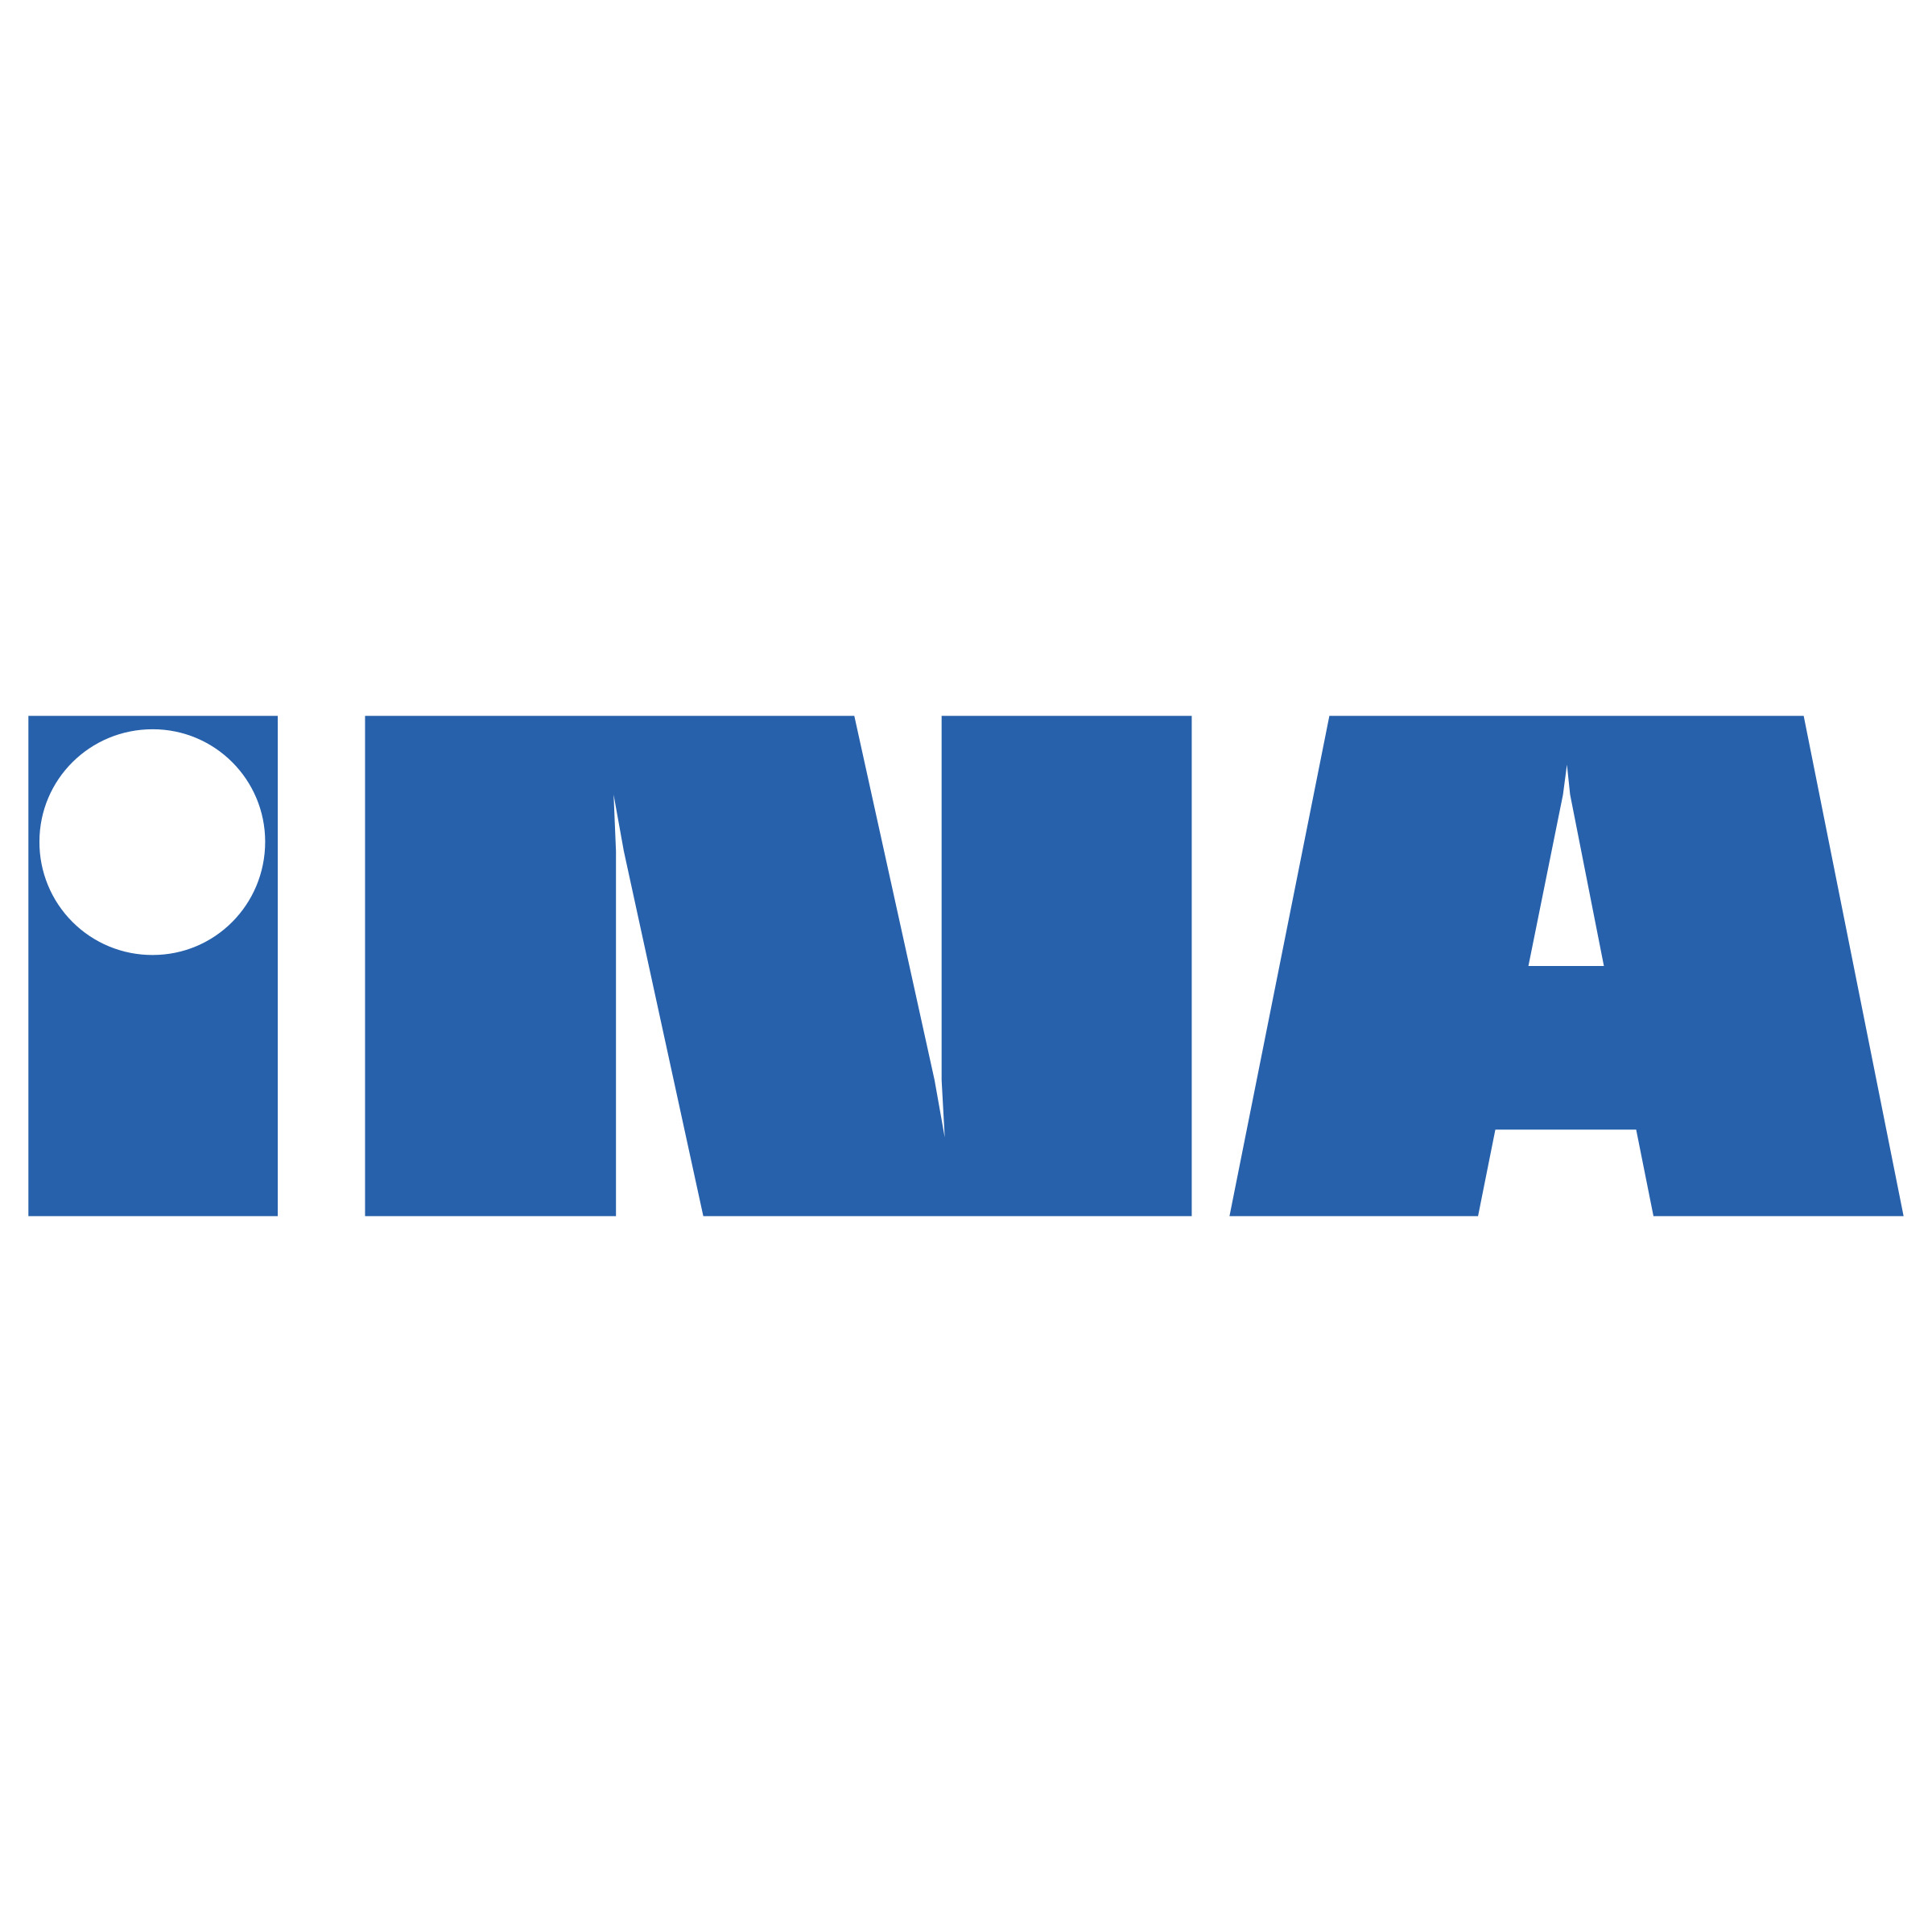 INA Logo PNG Transparent & SVG Vector.